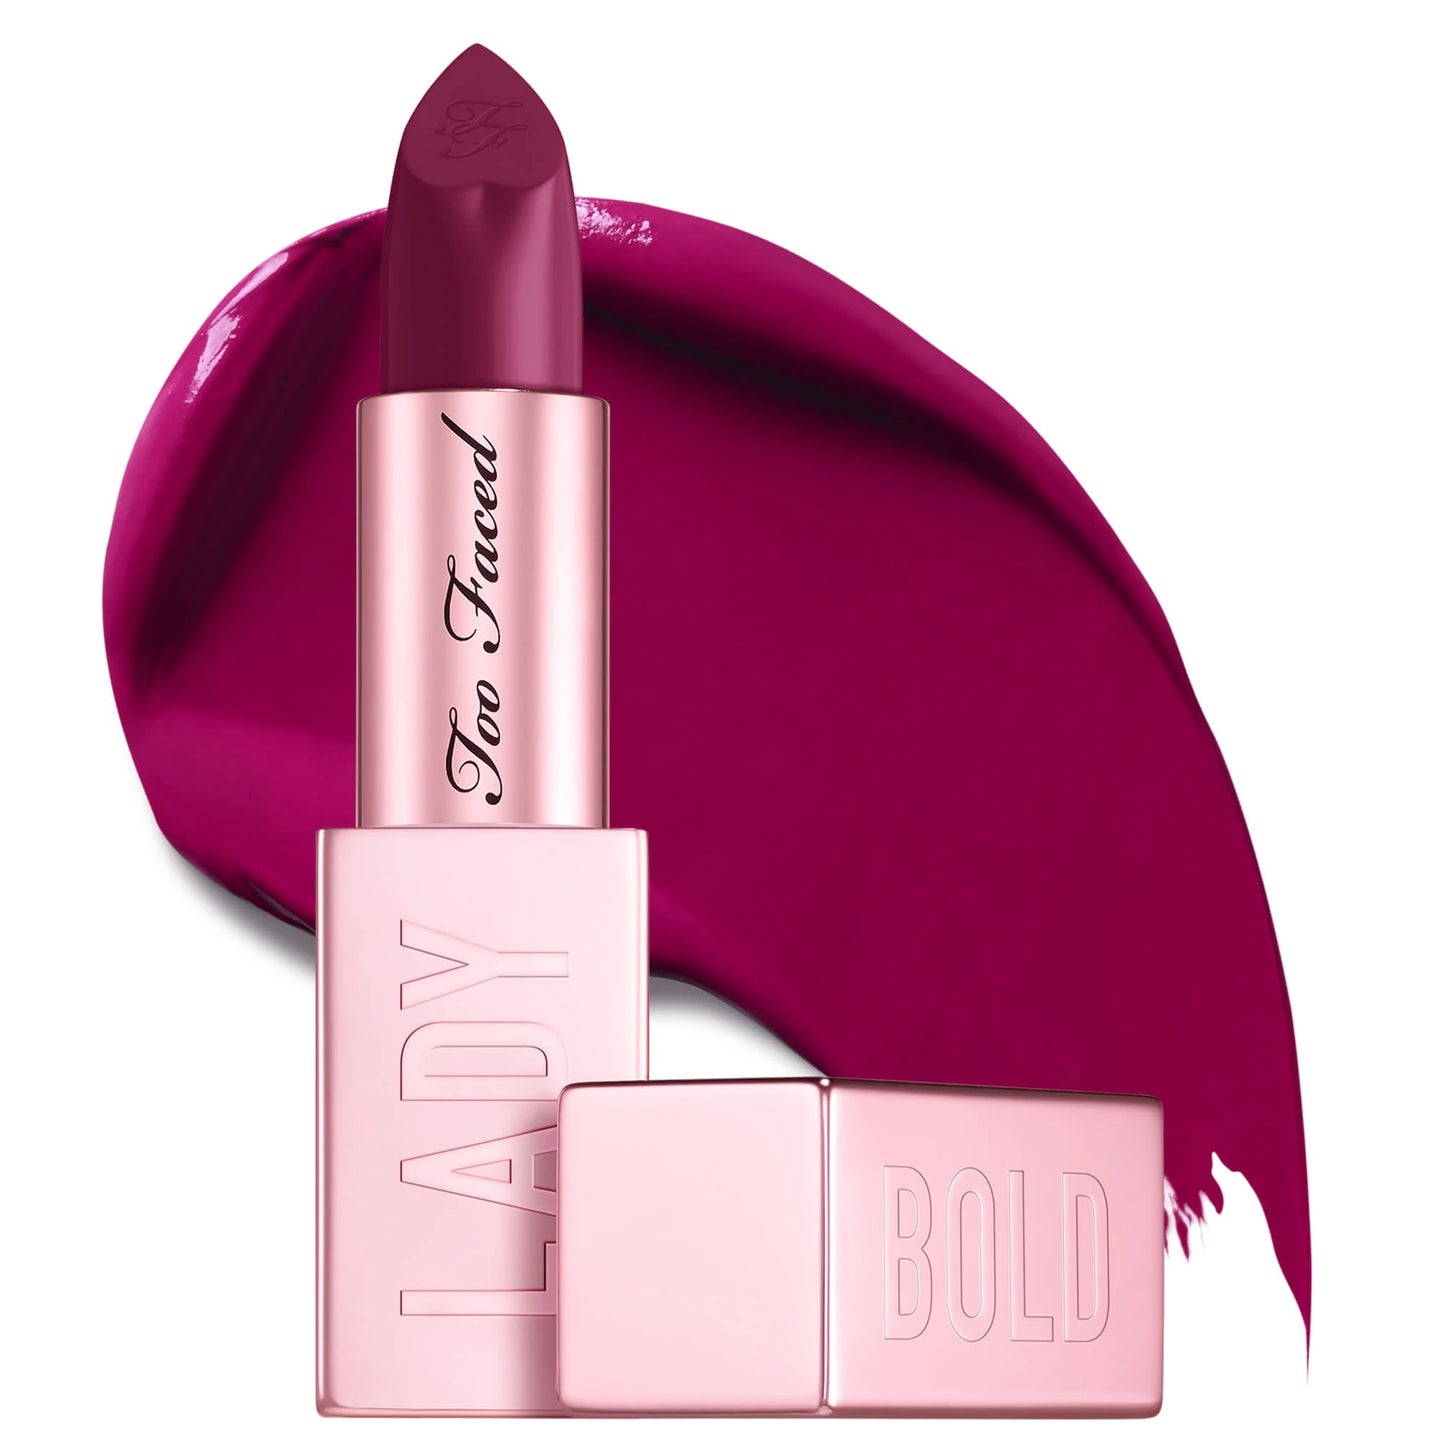 Too Faced Lady Bold Cream Lipstick 4g - Upgrade